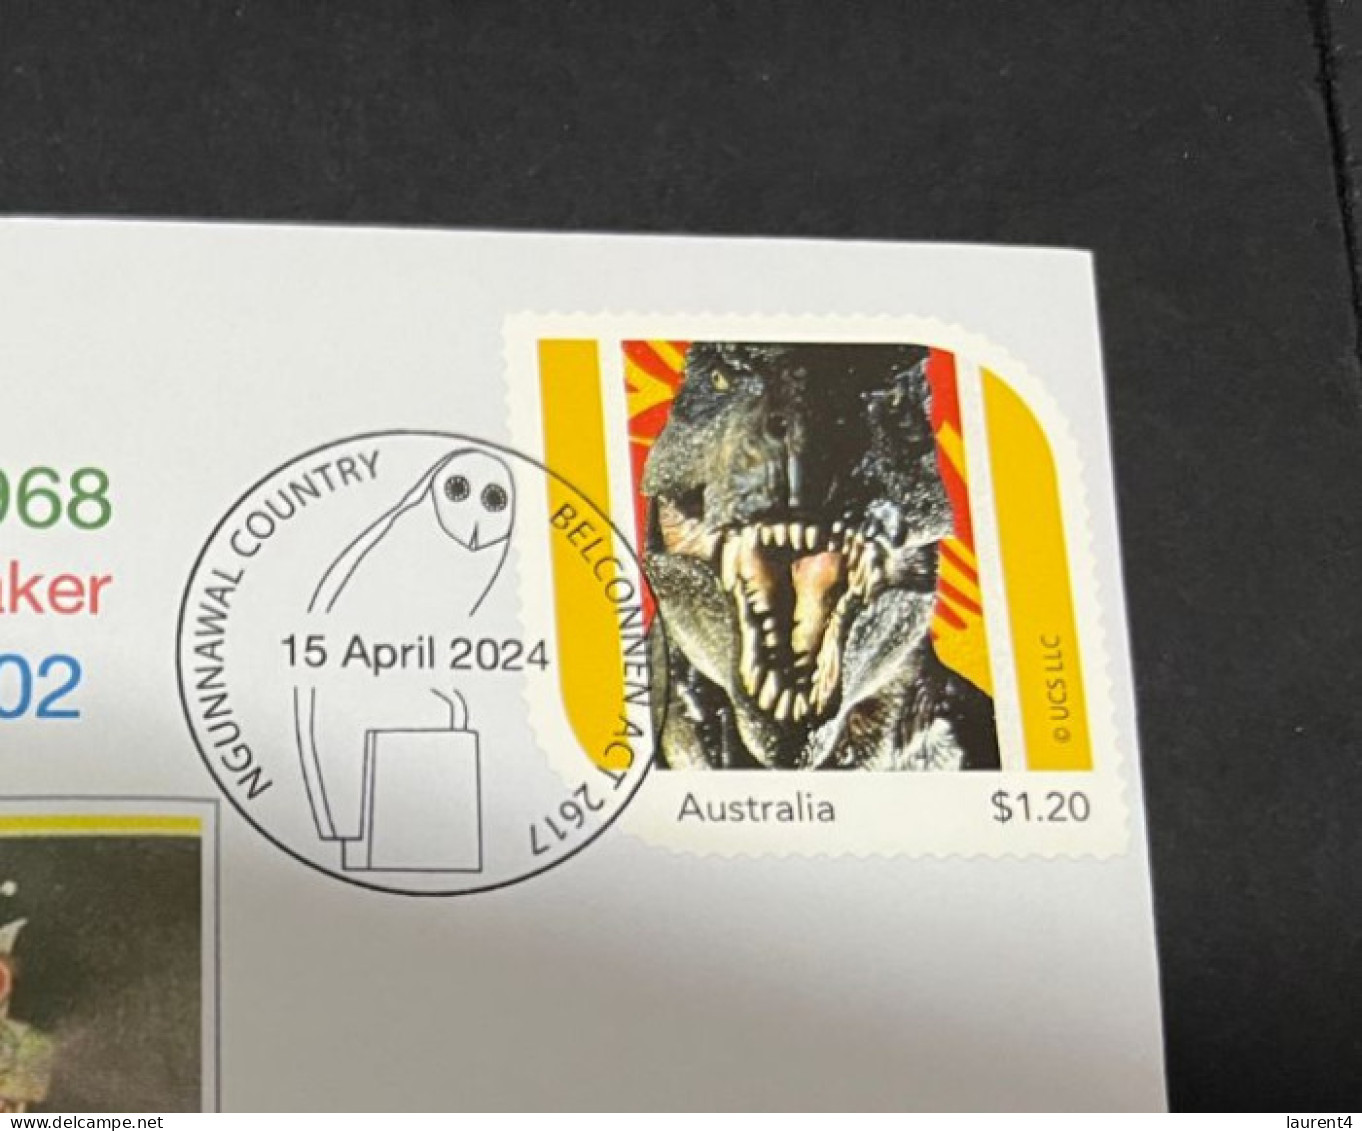 17-5-2024 (5 Z 17) Australian Personalised Stamp Isssued For Jurassic Park 30th Anniversary (Dinosaur & Fantasy Glades) - Prehistorics